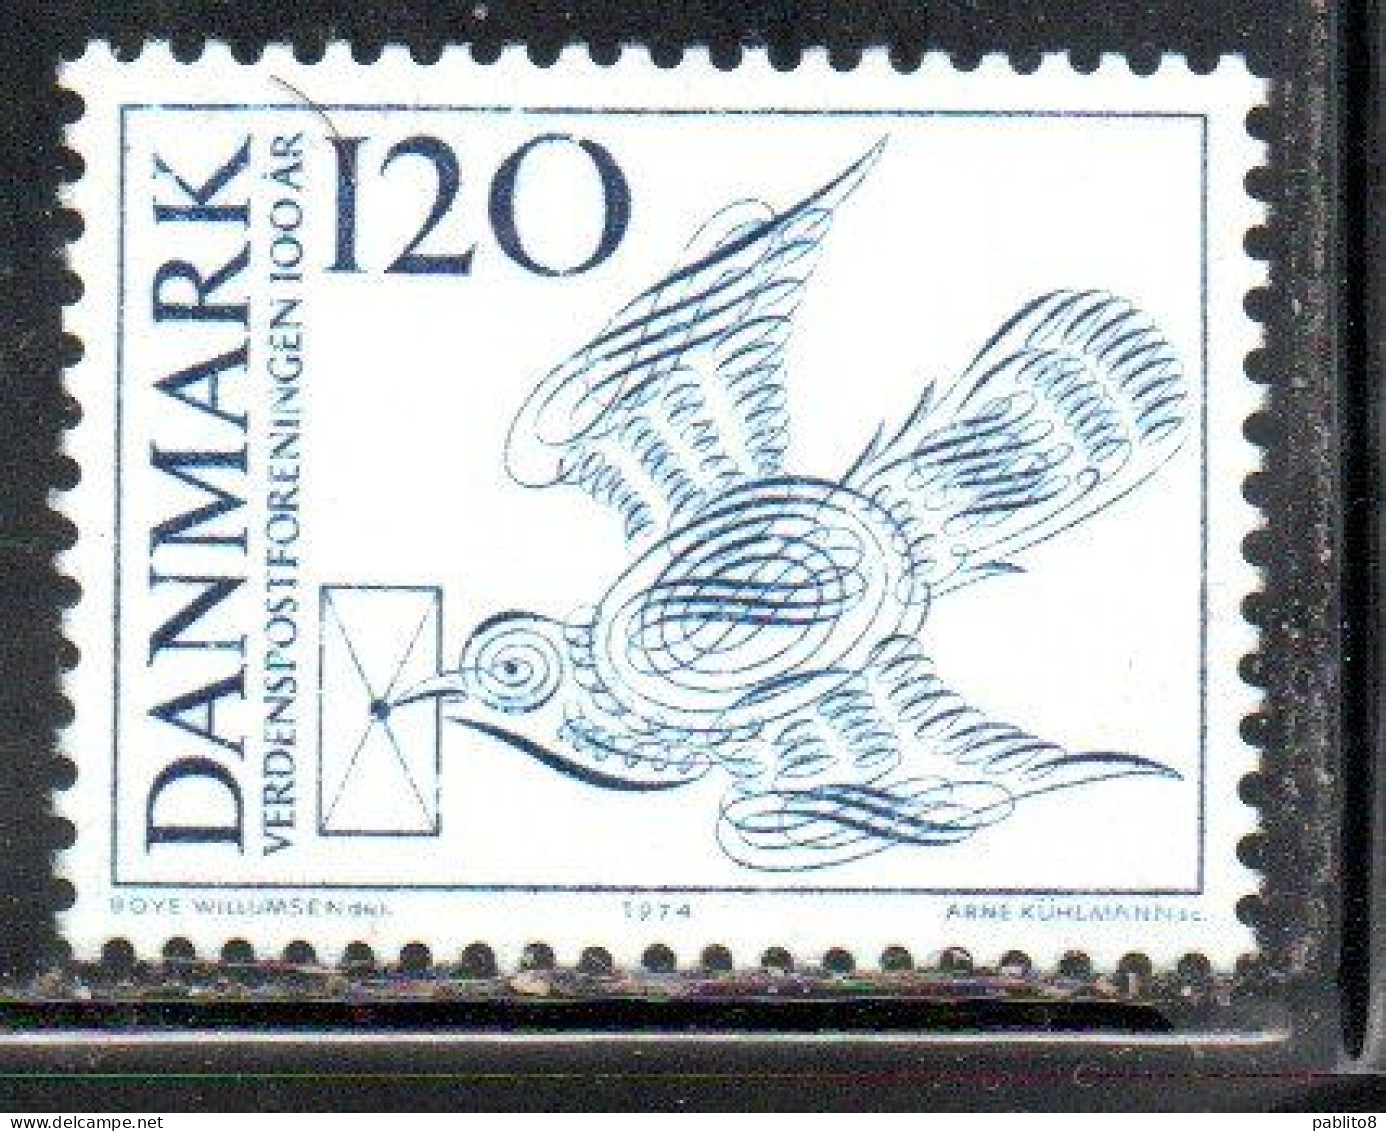 DANEMARK DANMARK DENMARK DANIMARCA 1974 CENTENARY OF UPU CARRIER PIGEON 120o MNH - Ungebraucht